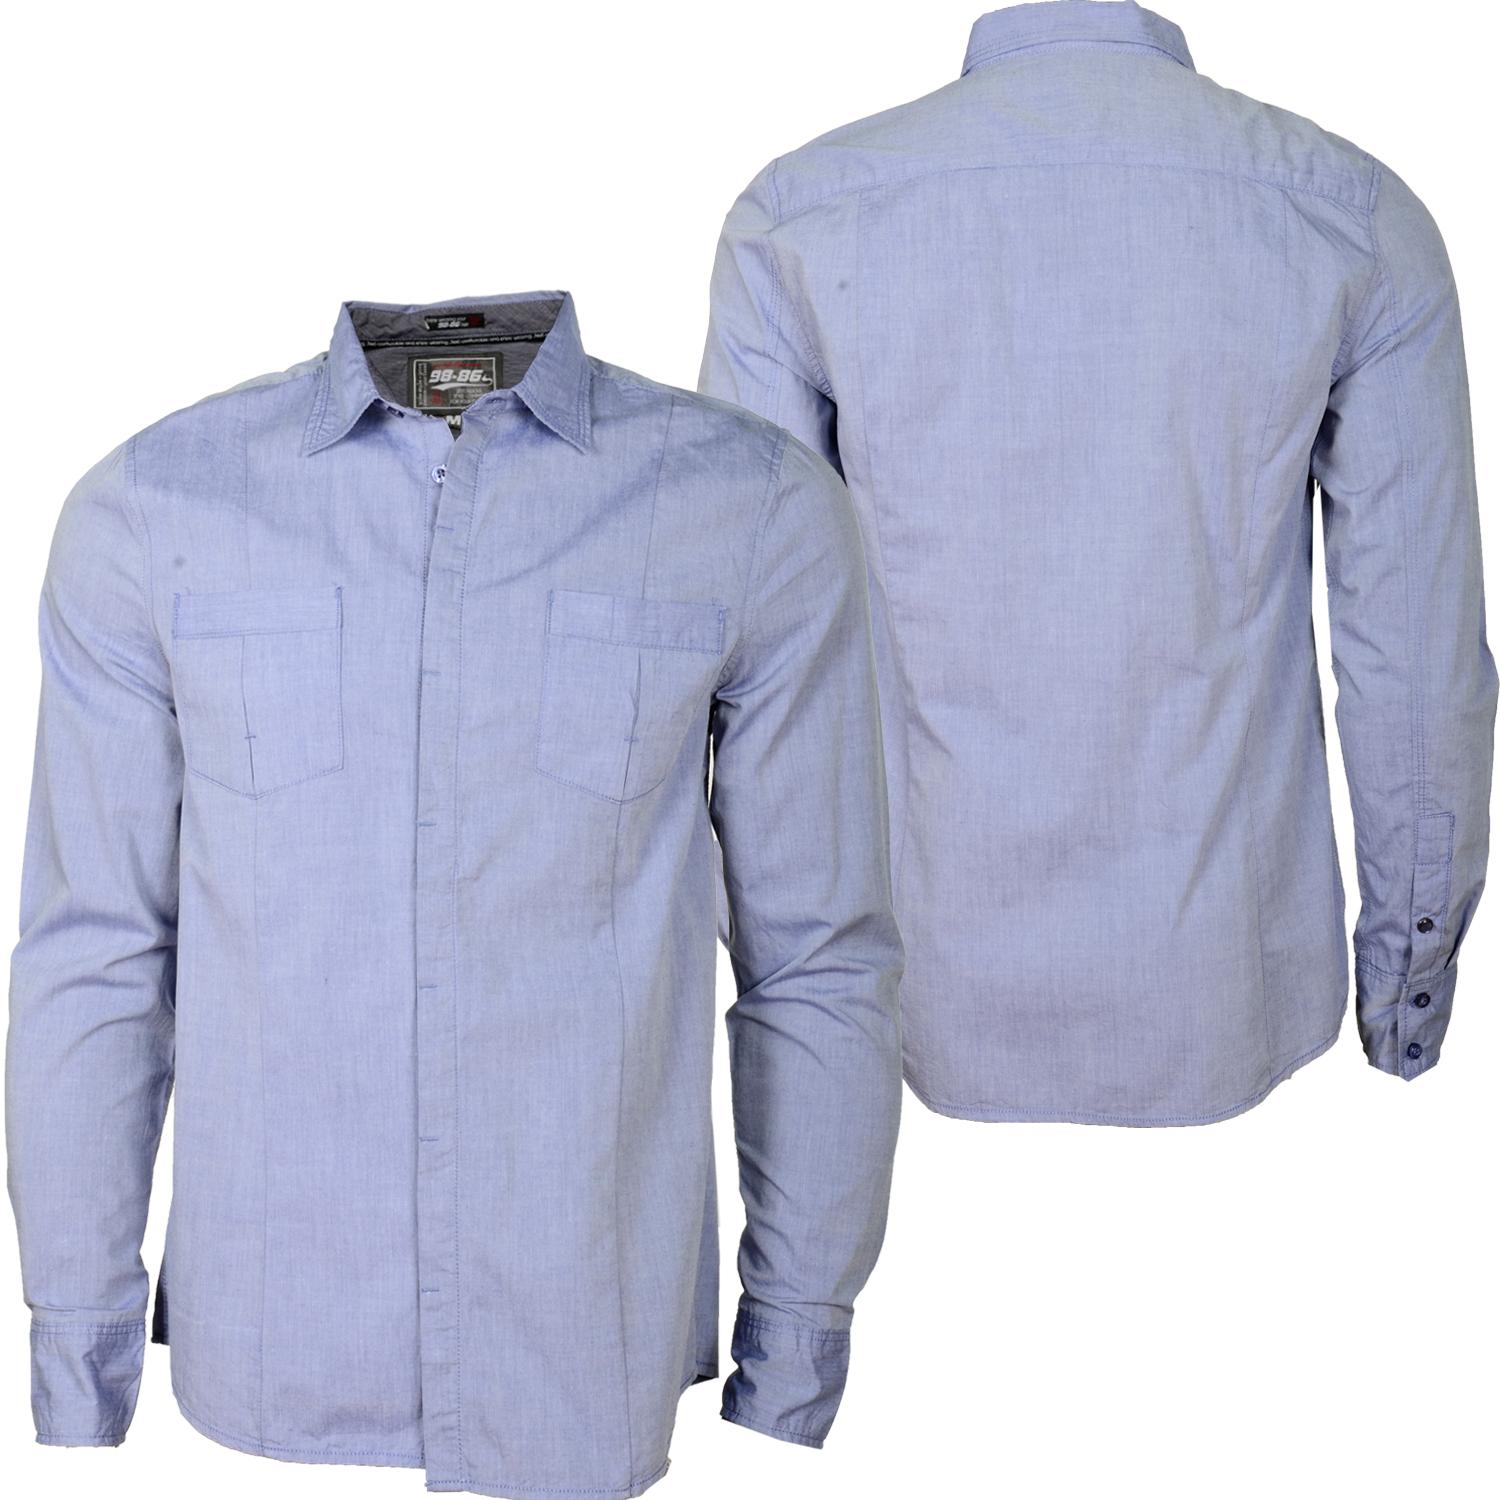 Foto 98-86 Kontrast Slim Fit Camisas Azul Claro